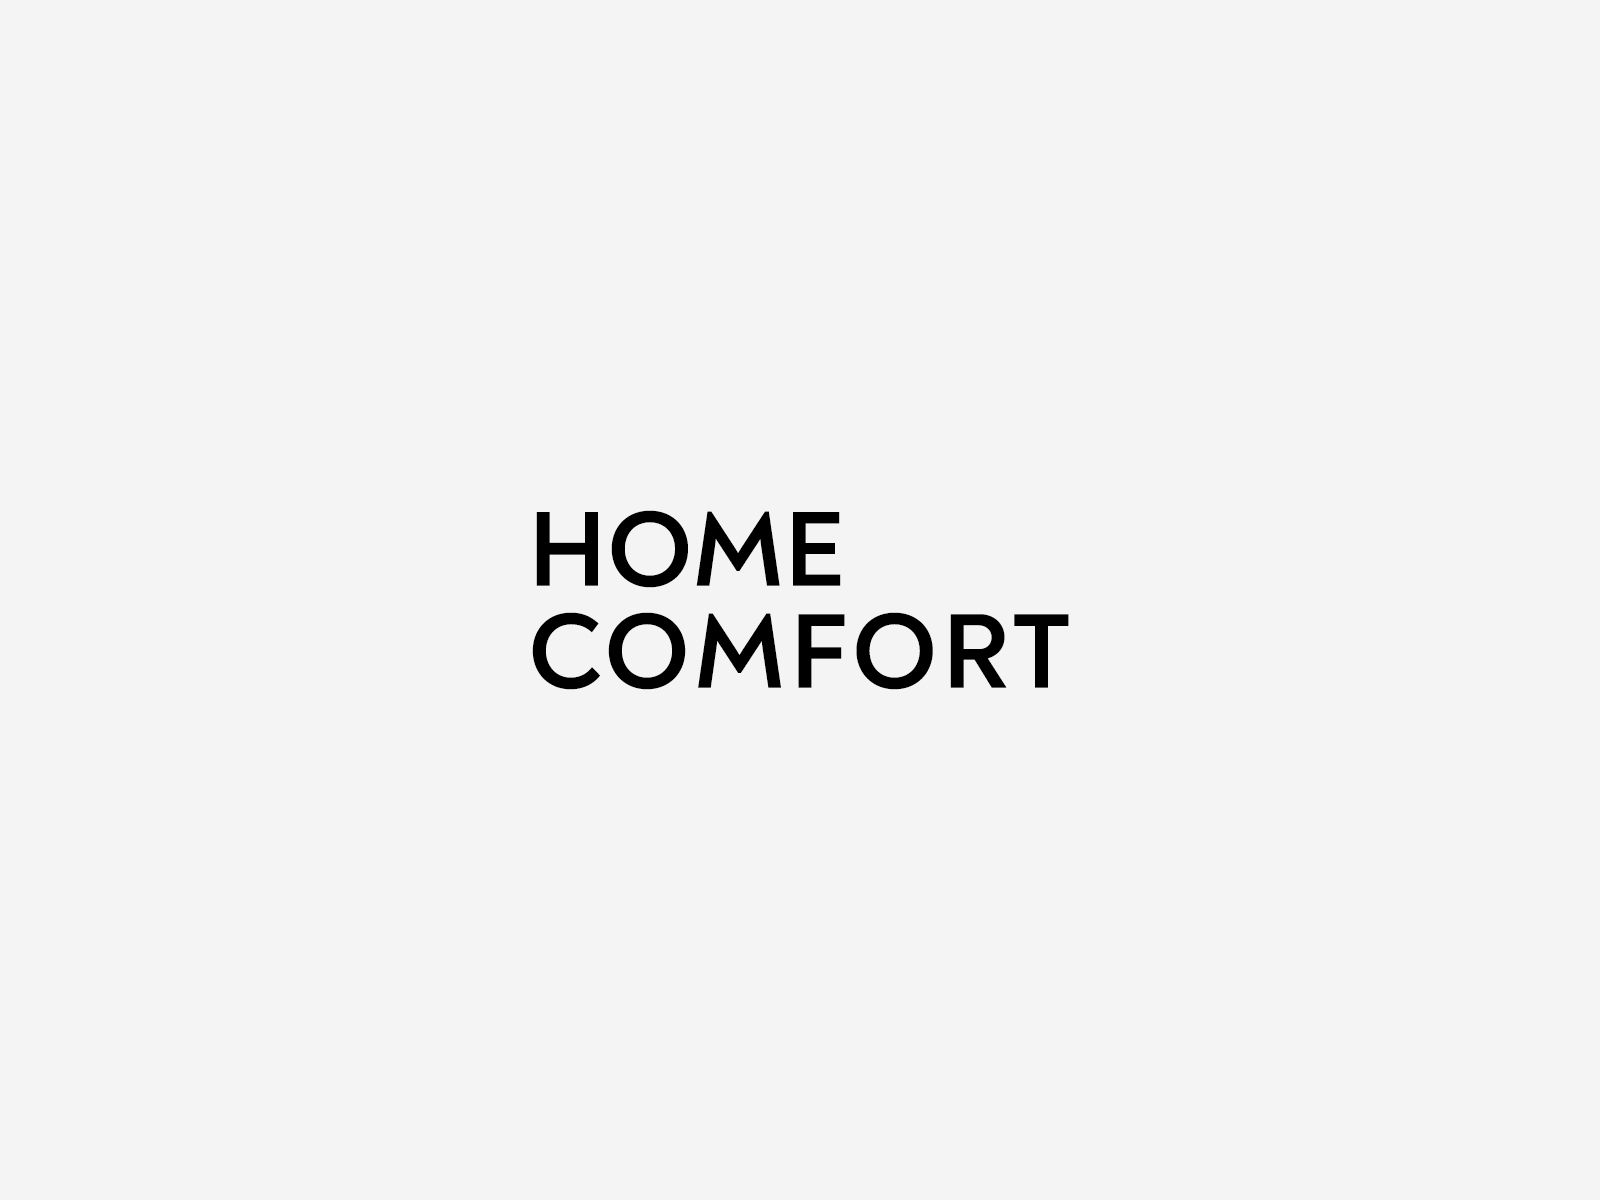 logotype - home comfort by BULAT FAHRIEV on Dribbble